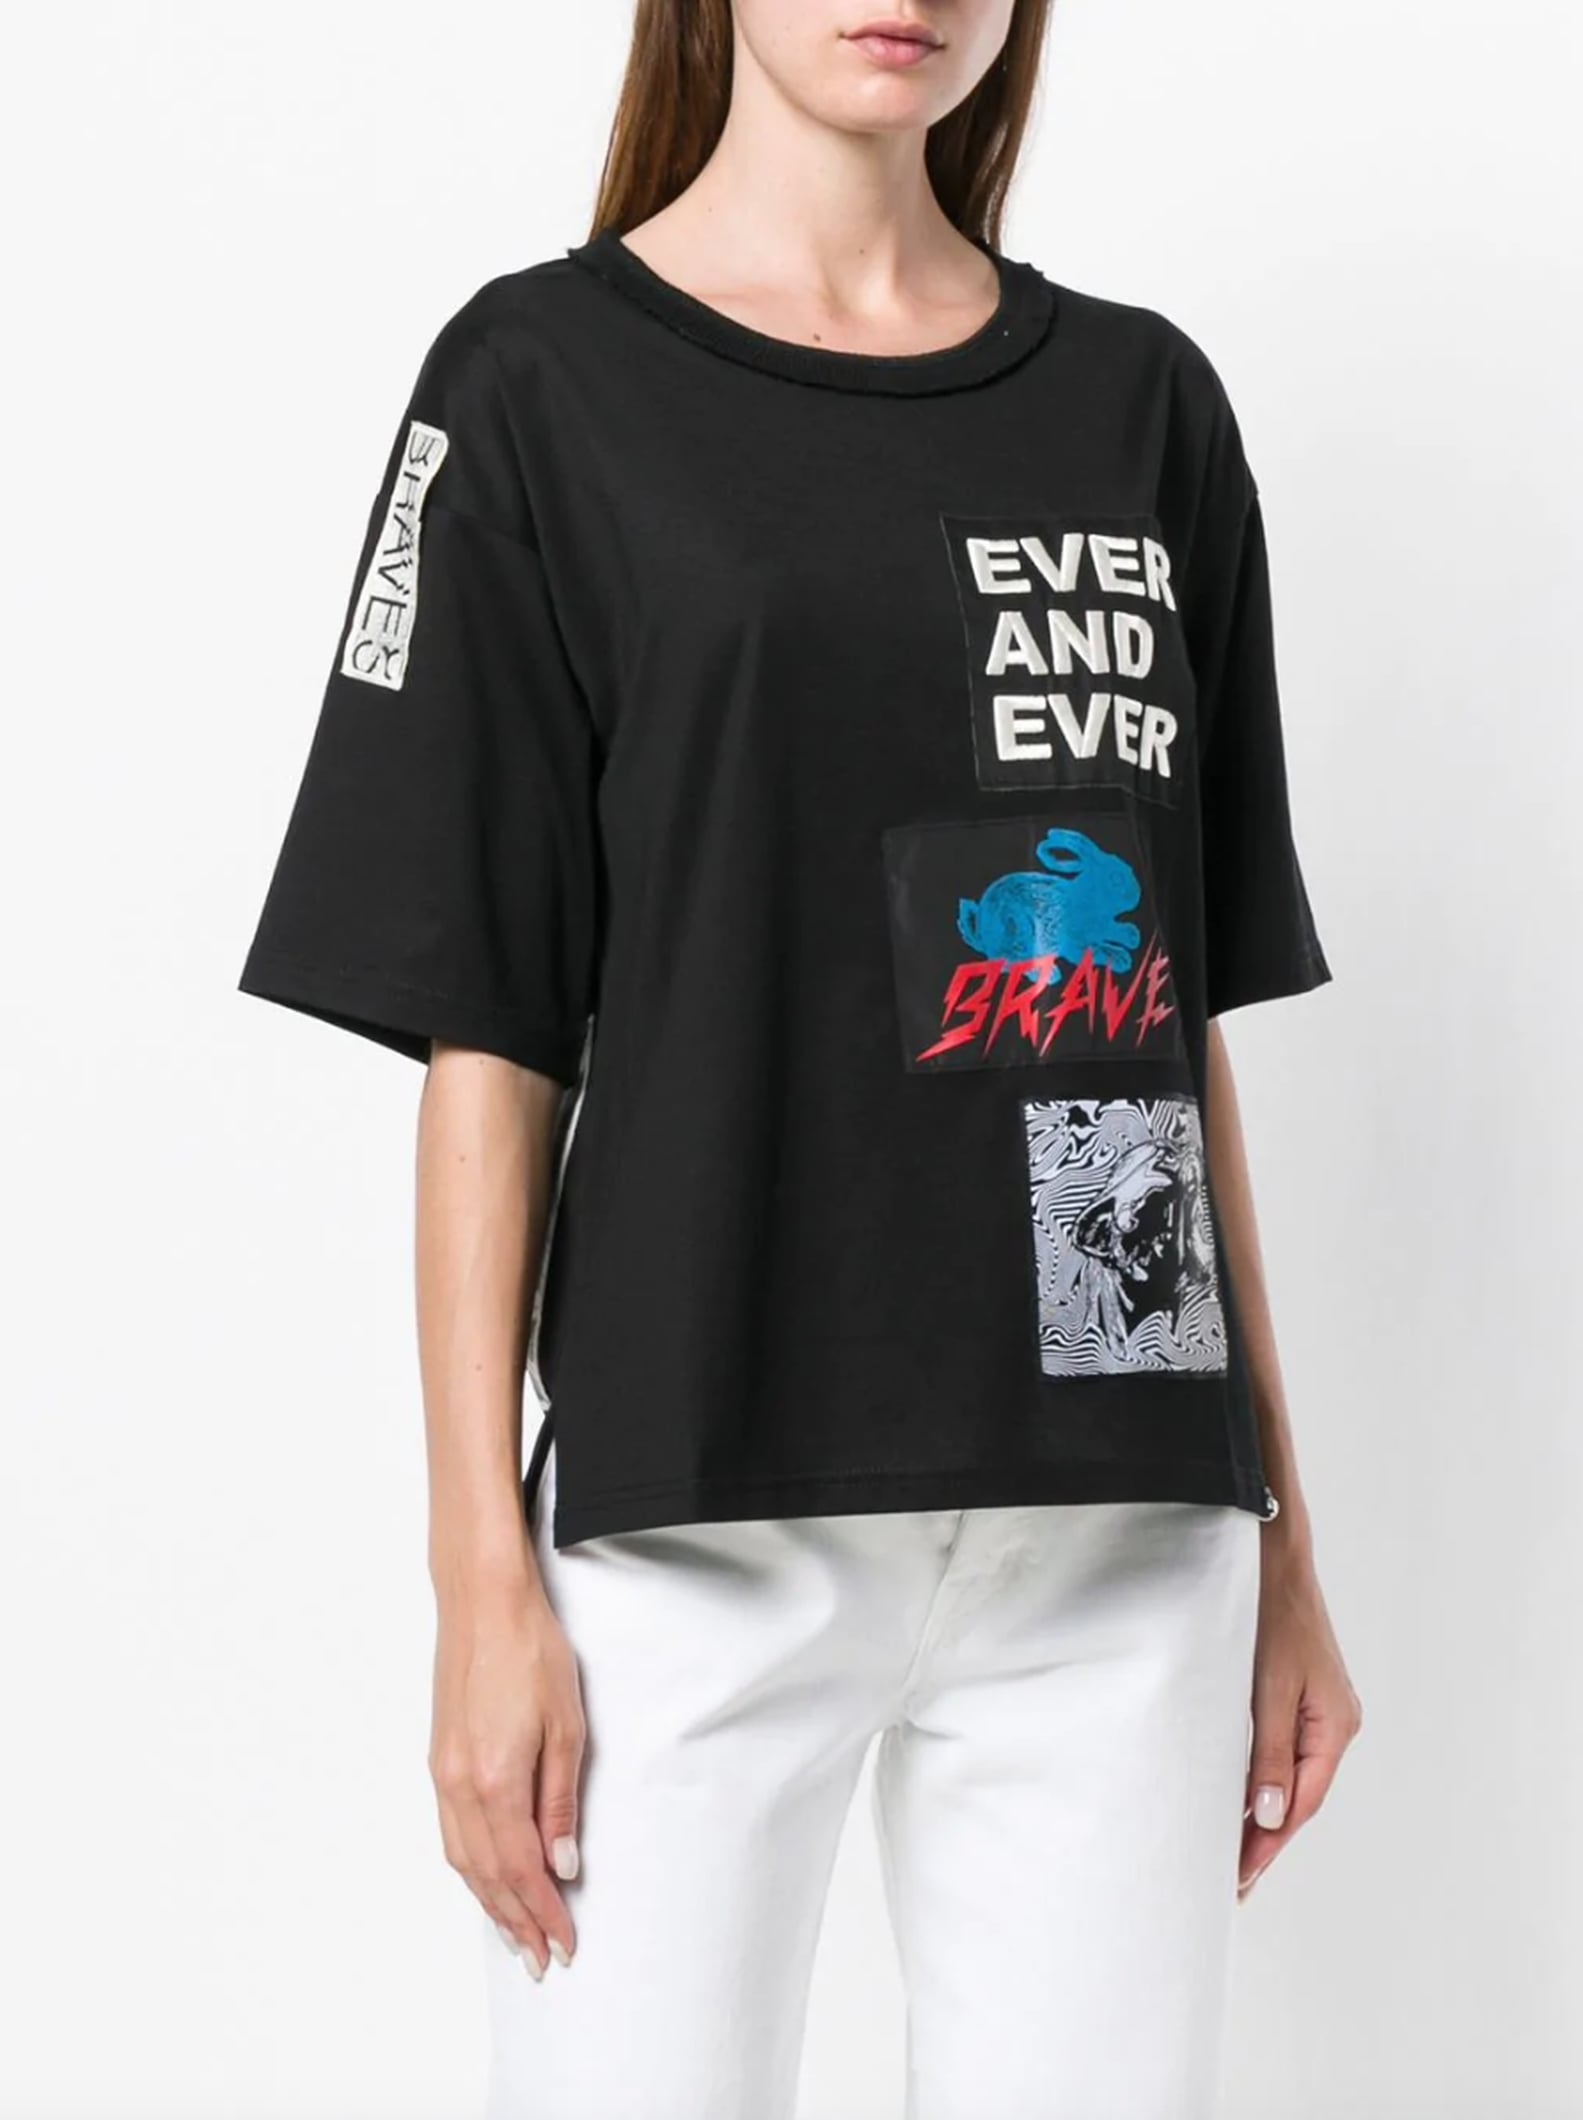 Kylie Jenner's Astroworld T-Shirt | POPSUGAR Fashion